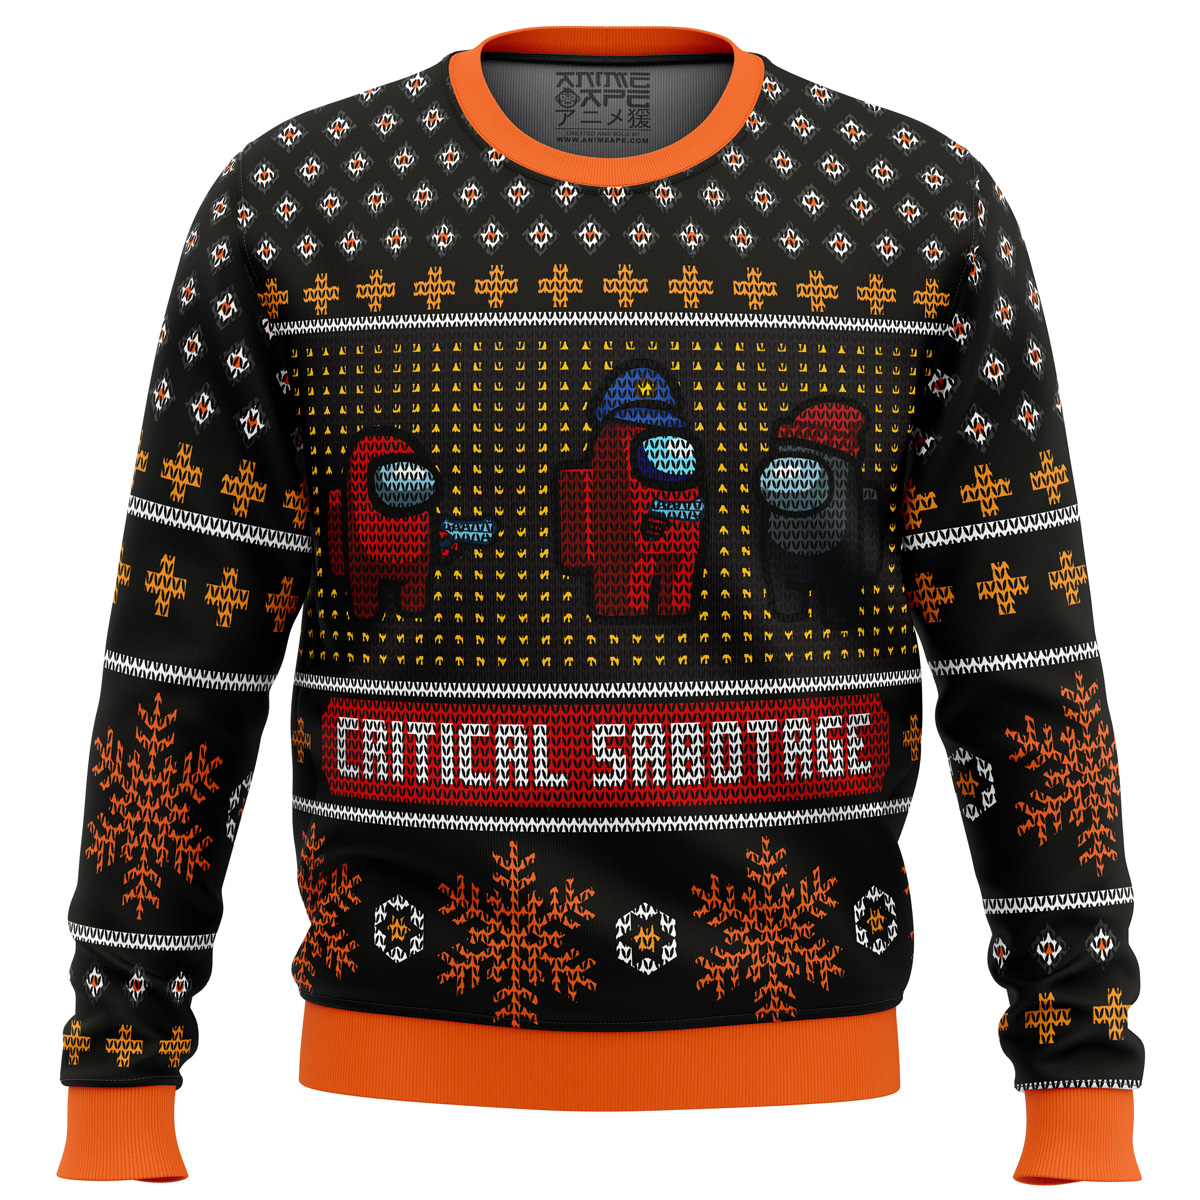 critical sabotage among us ugly christmas sweater ana2207 1974 - Fandomaniax Store